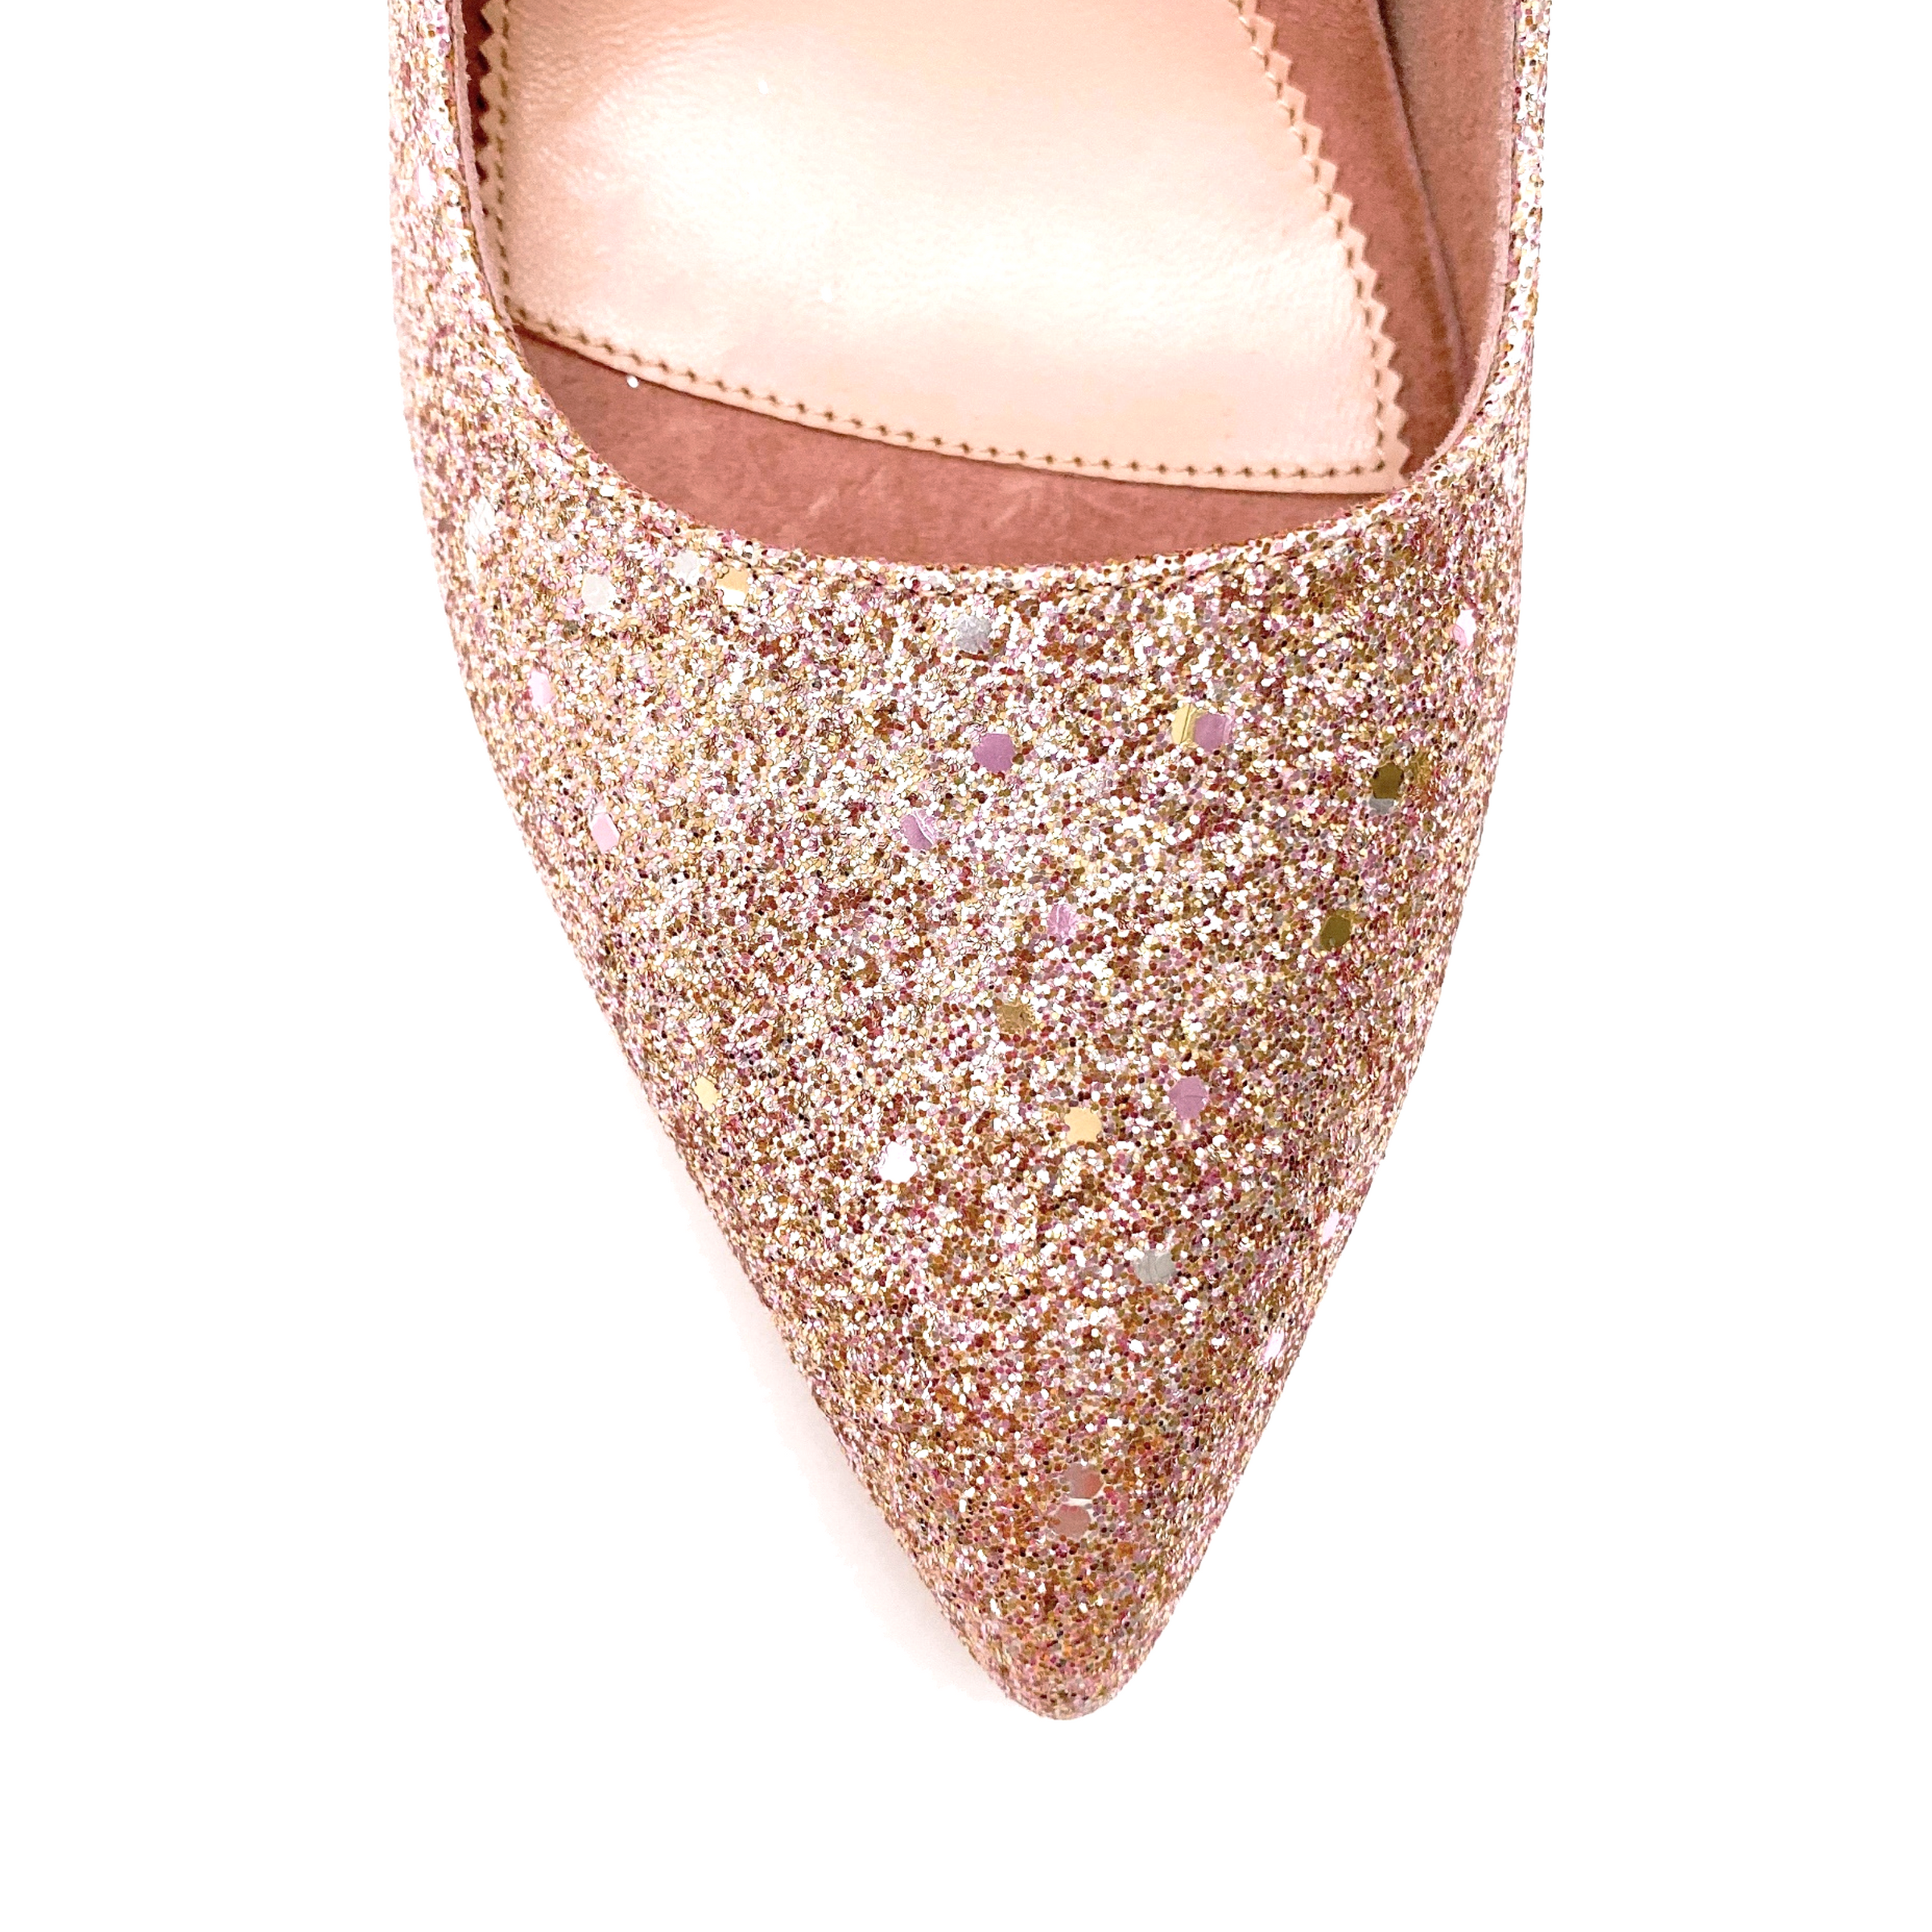 rose gold comfortable heels